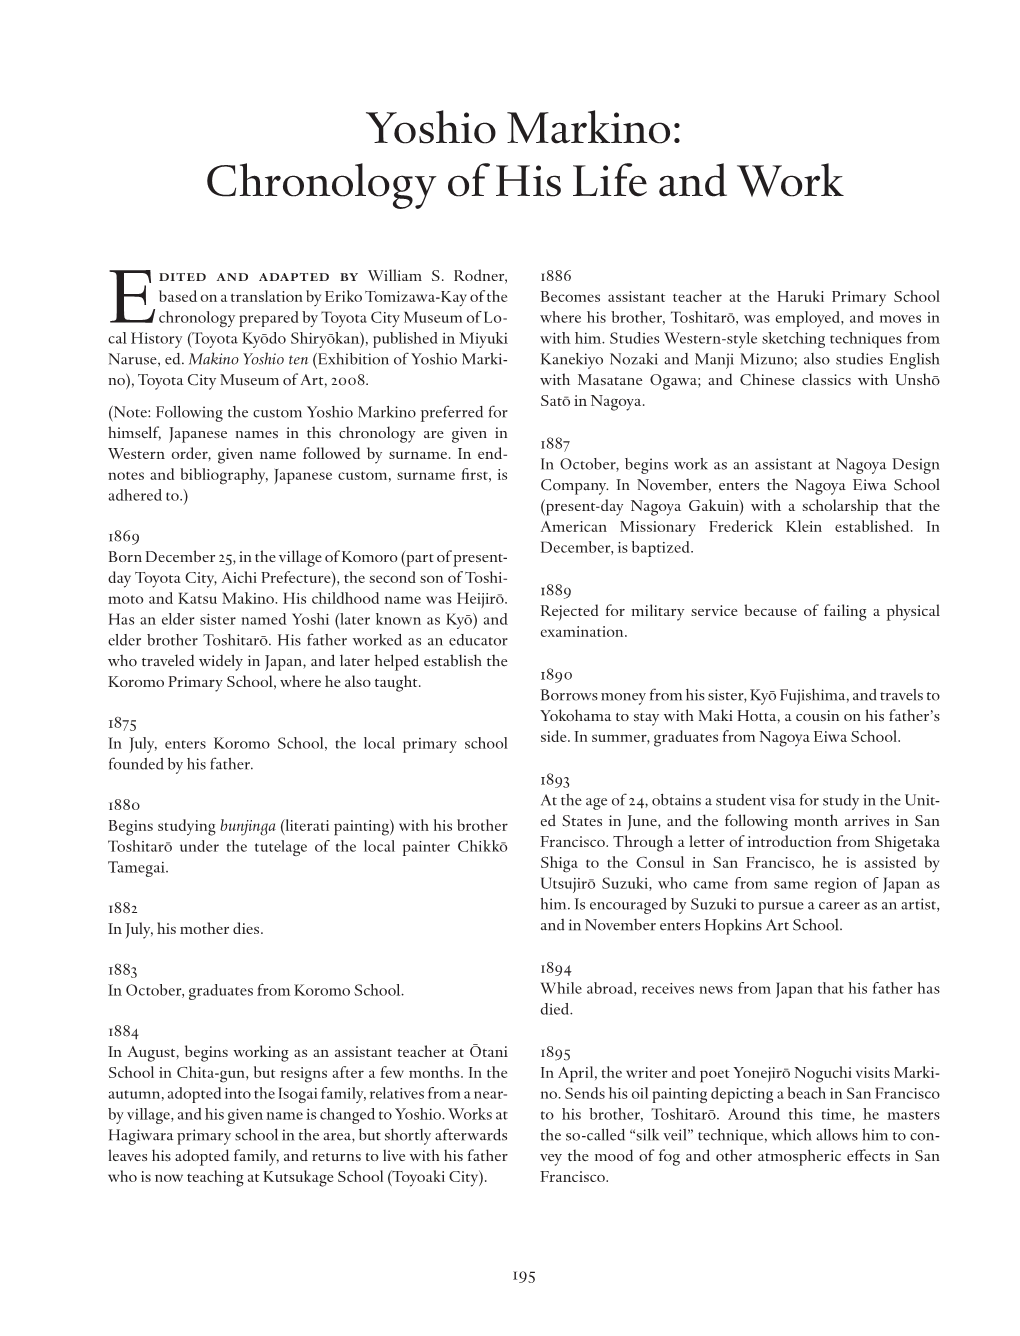 Yoshio Markino: Chronology of His Life and Work